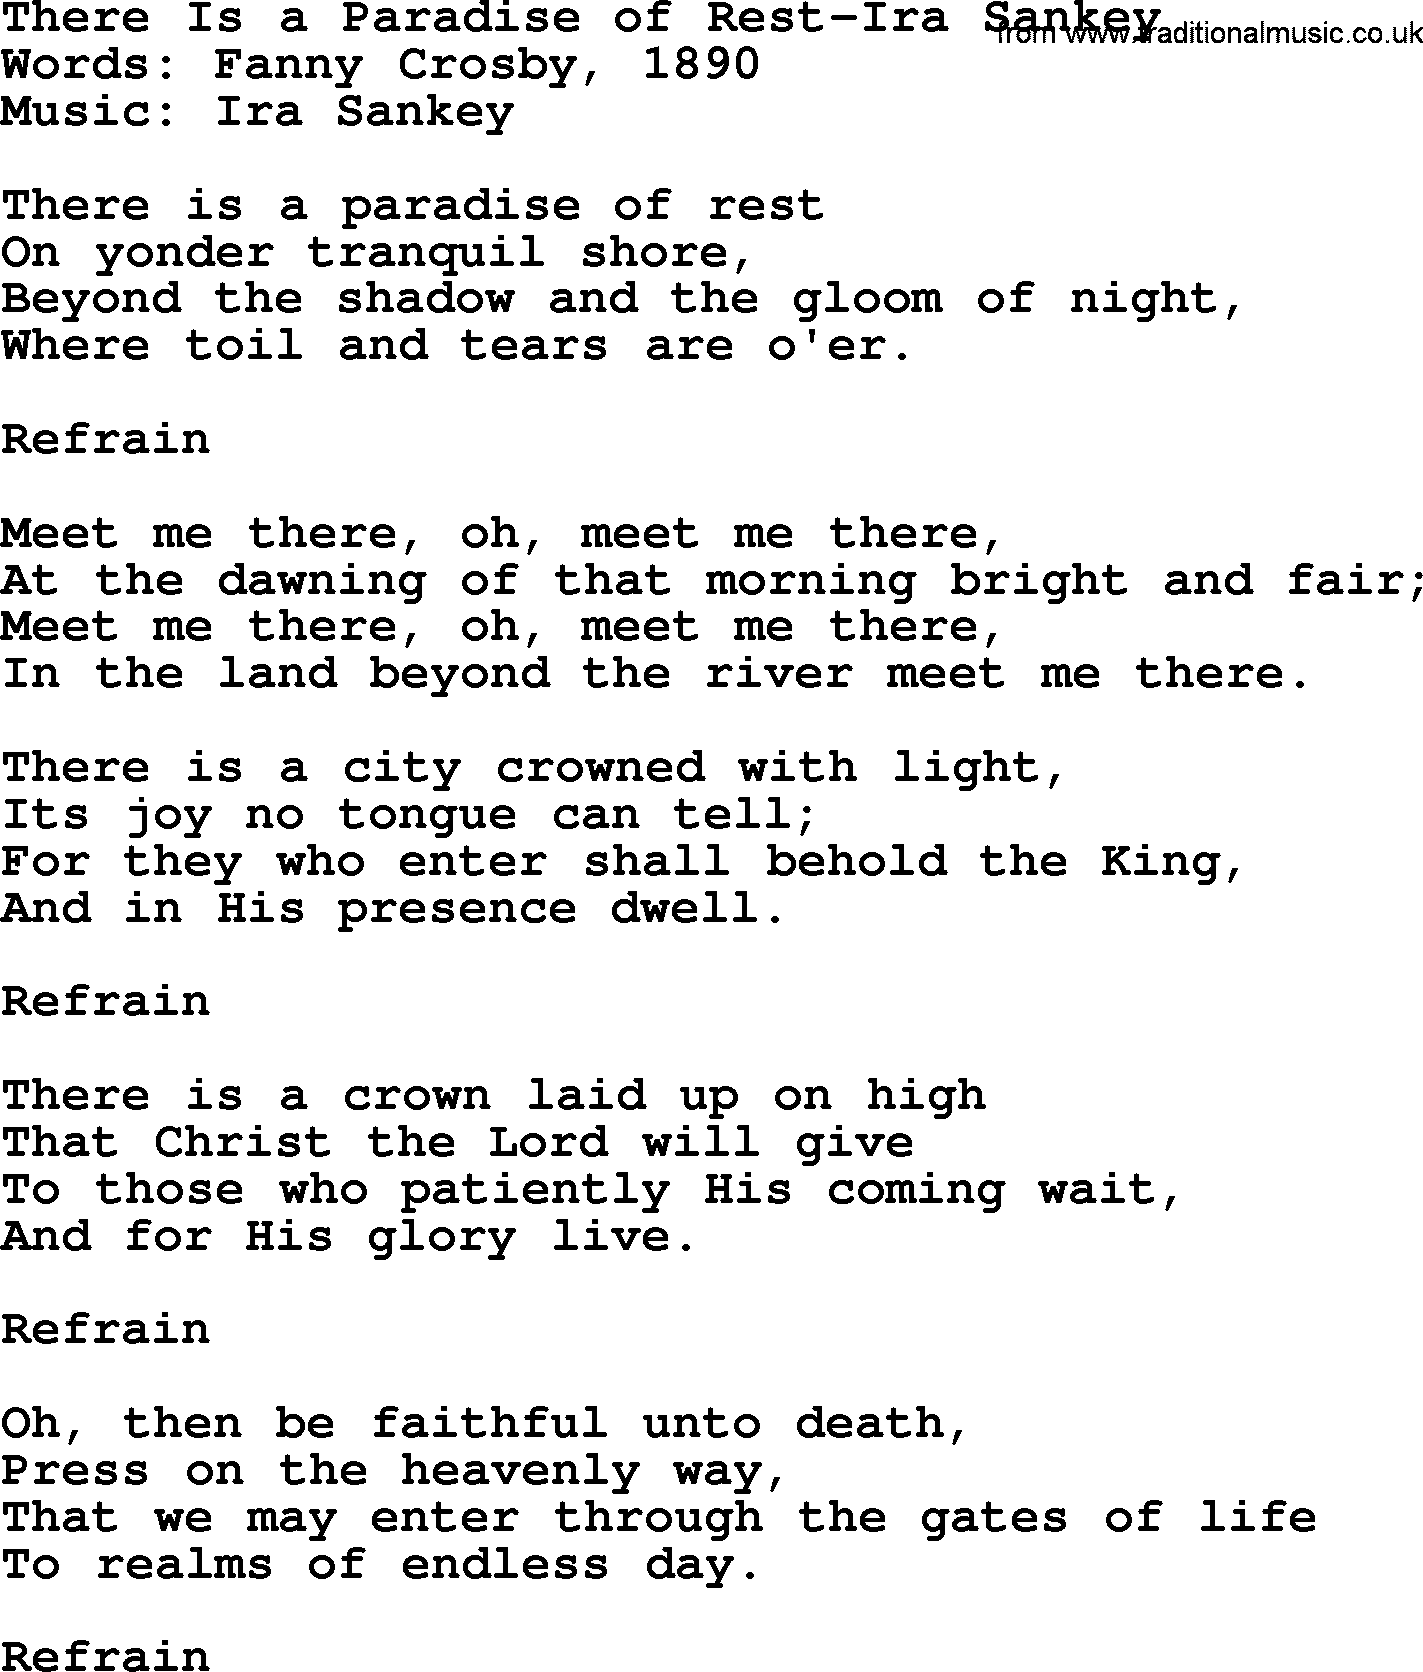 Ira Sankey hymn: There Is a Paradise of Rest-Ira Sankey, lyrics